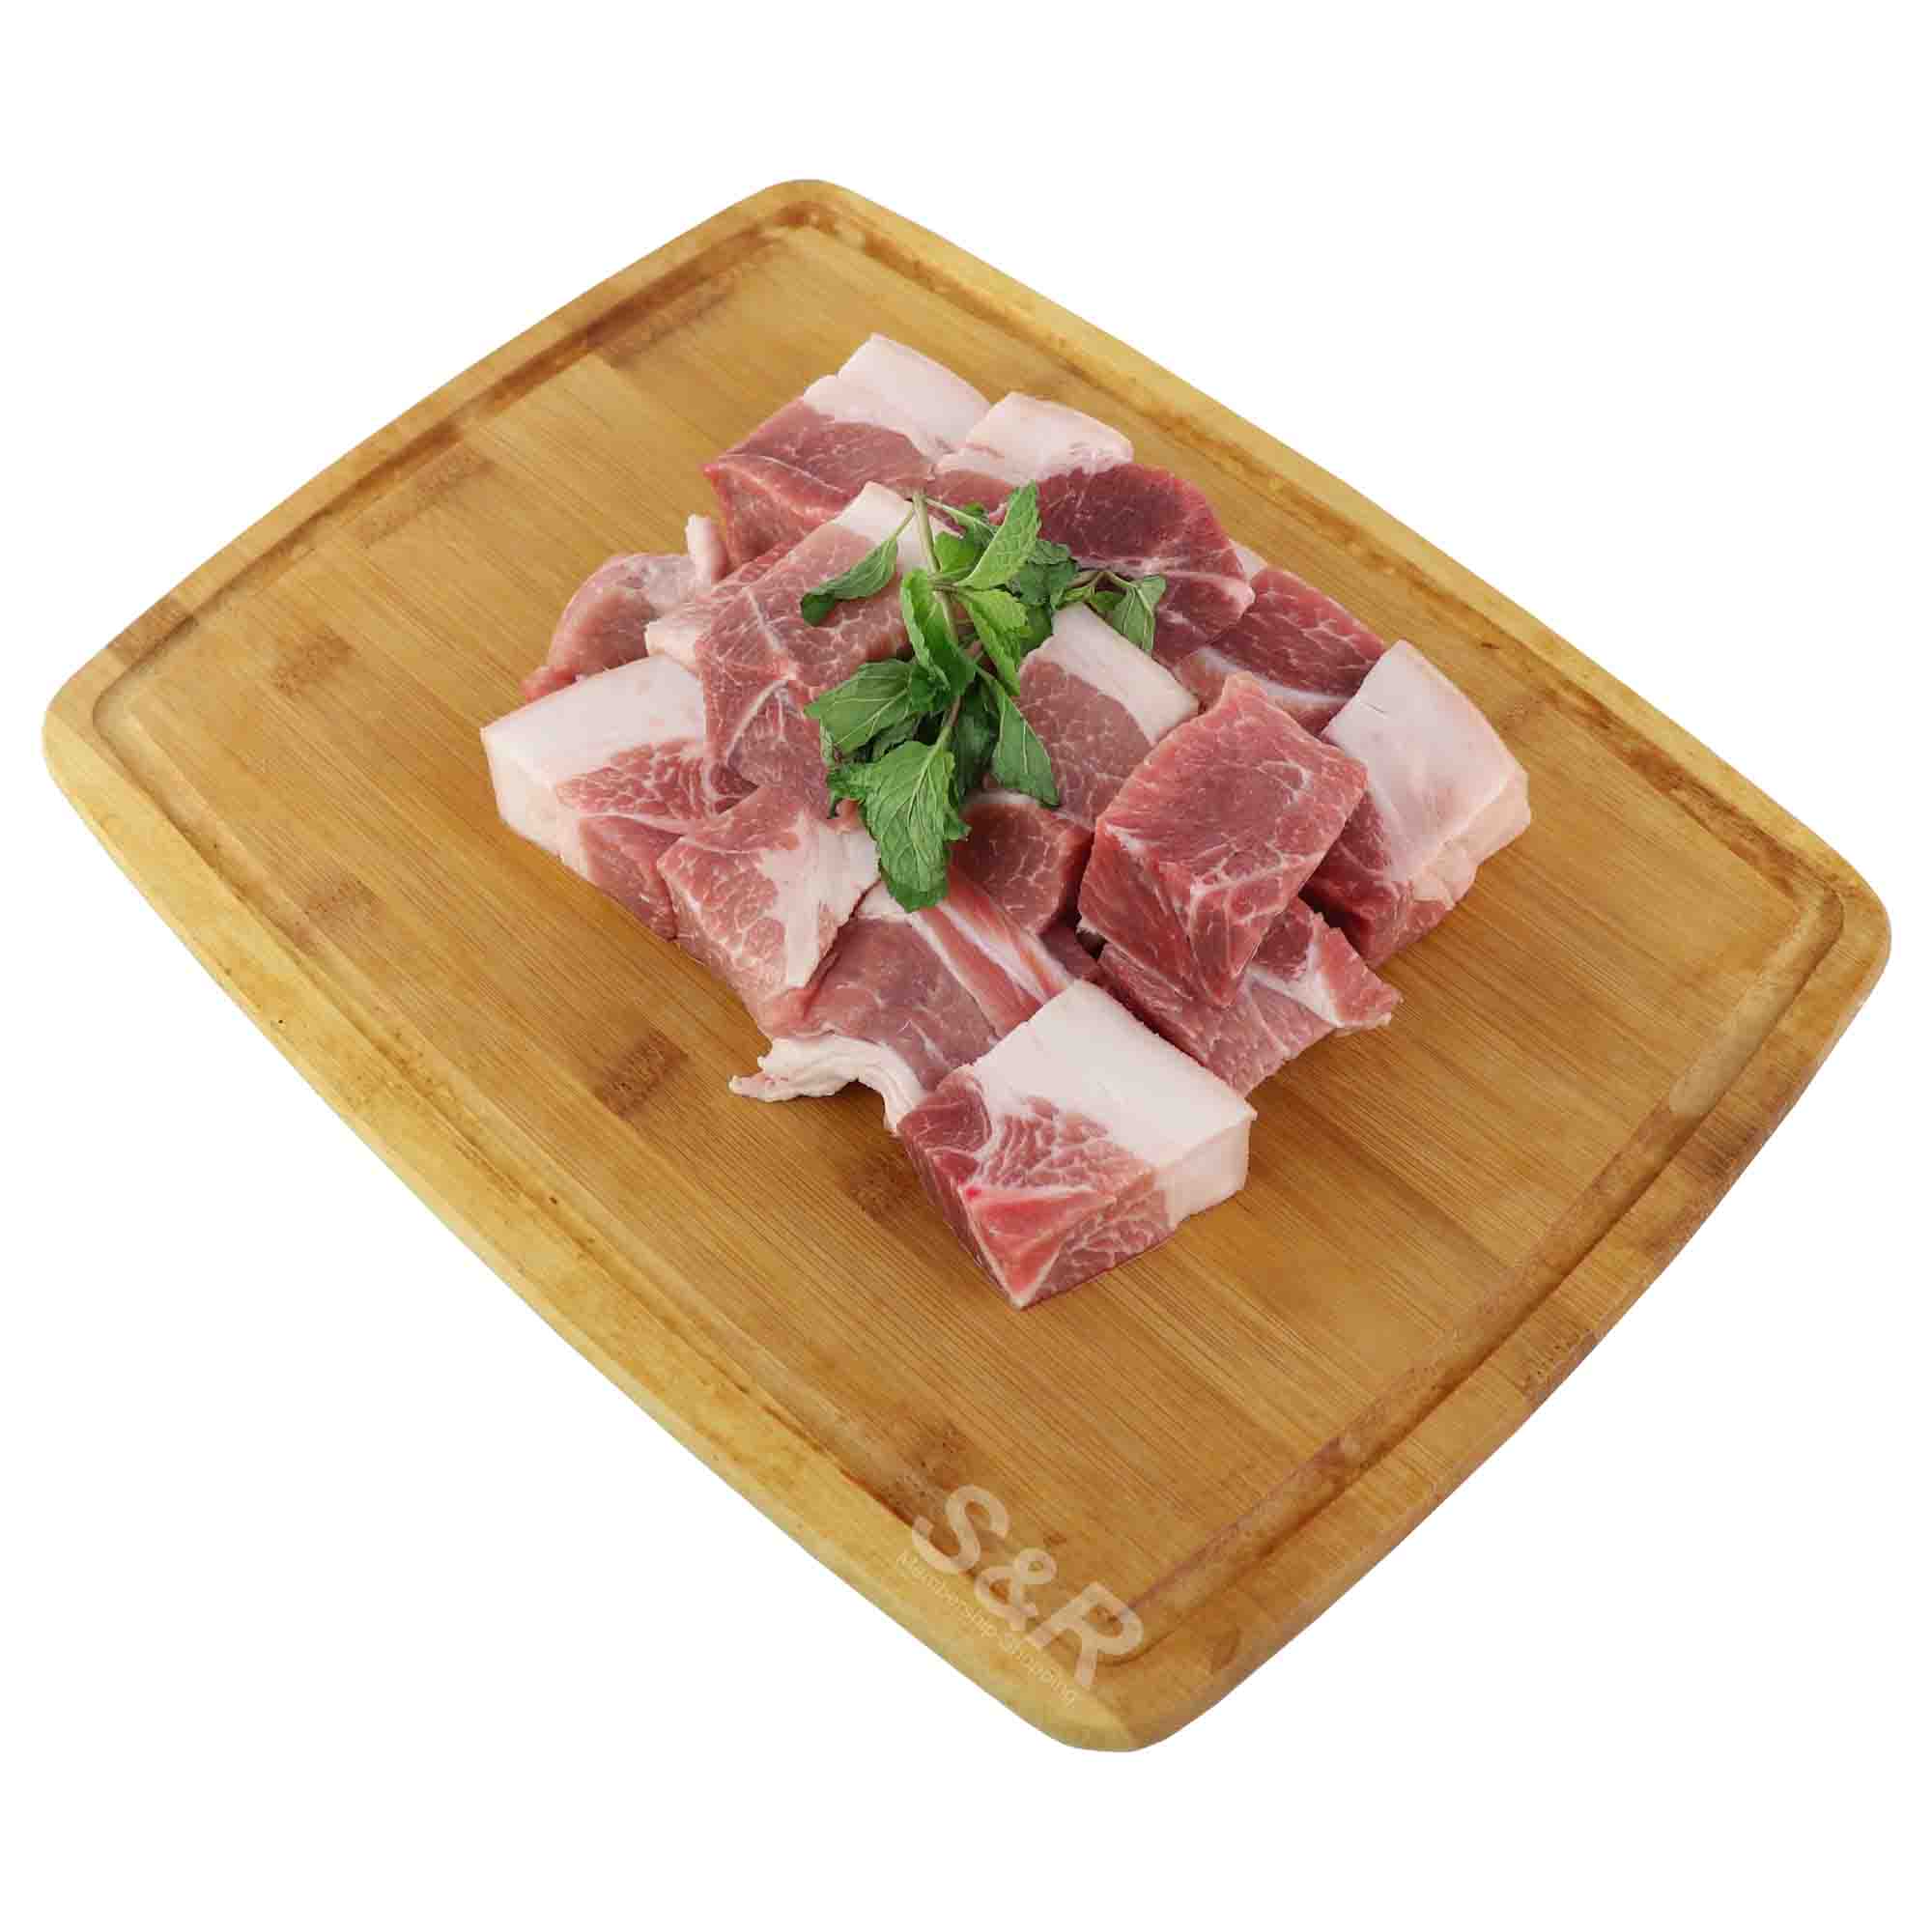 Members' Value Pork Adobo Cut approx. 1.7kg